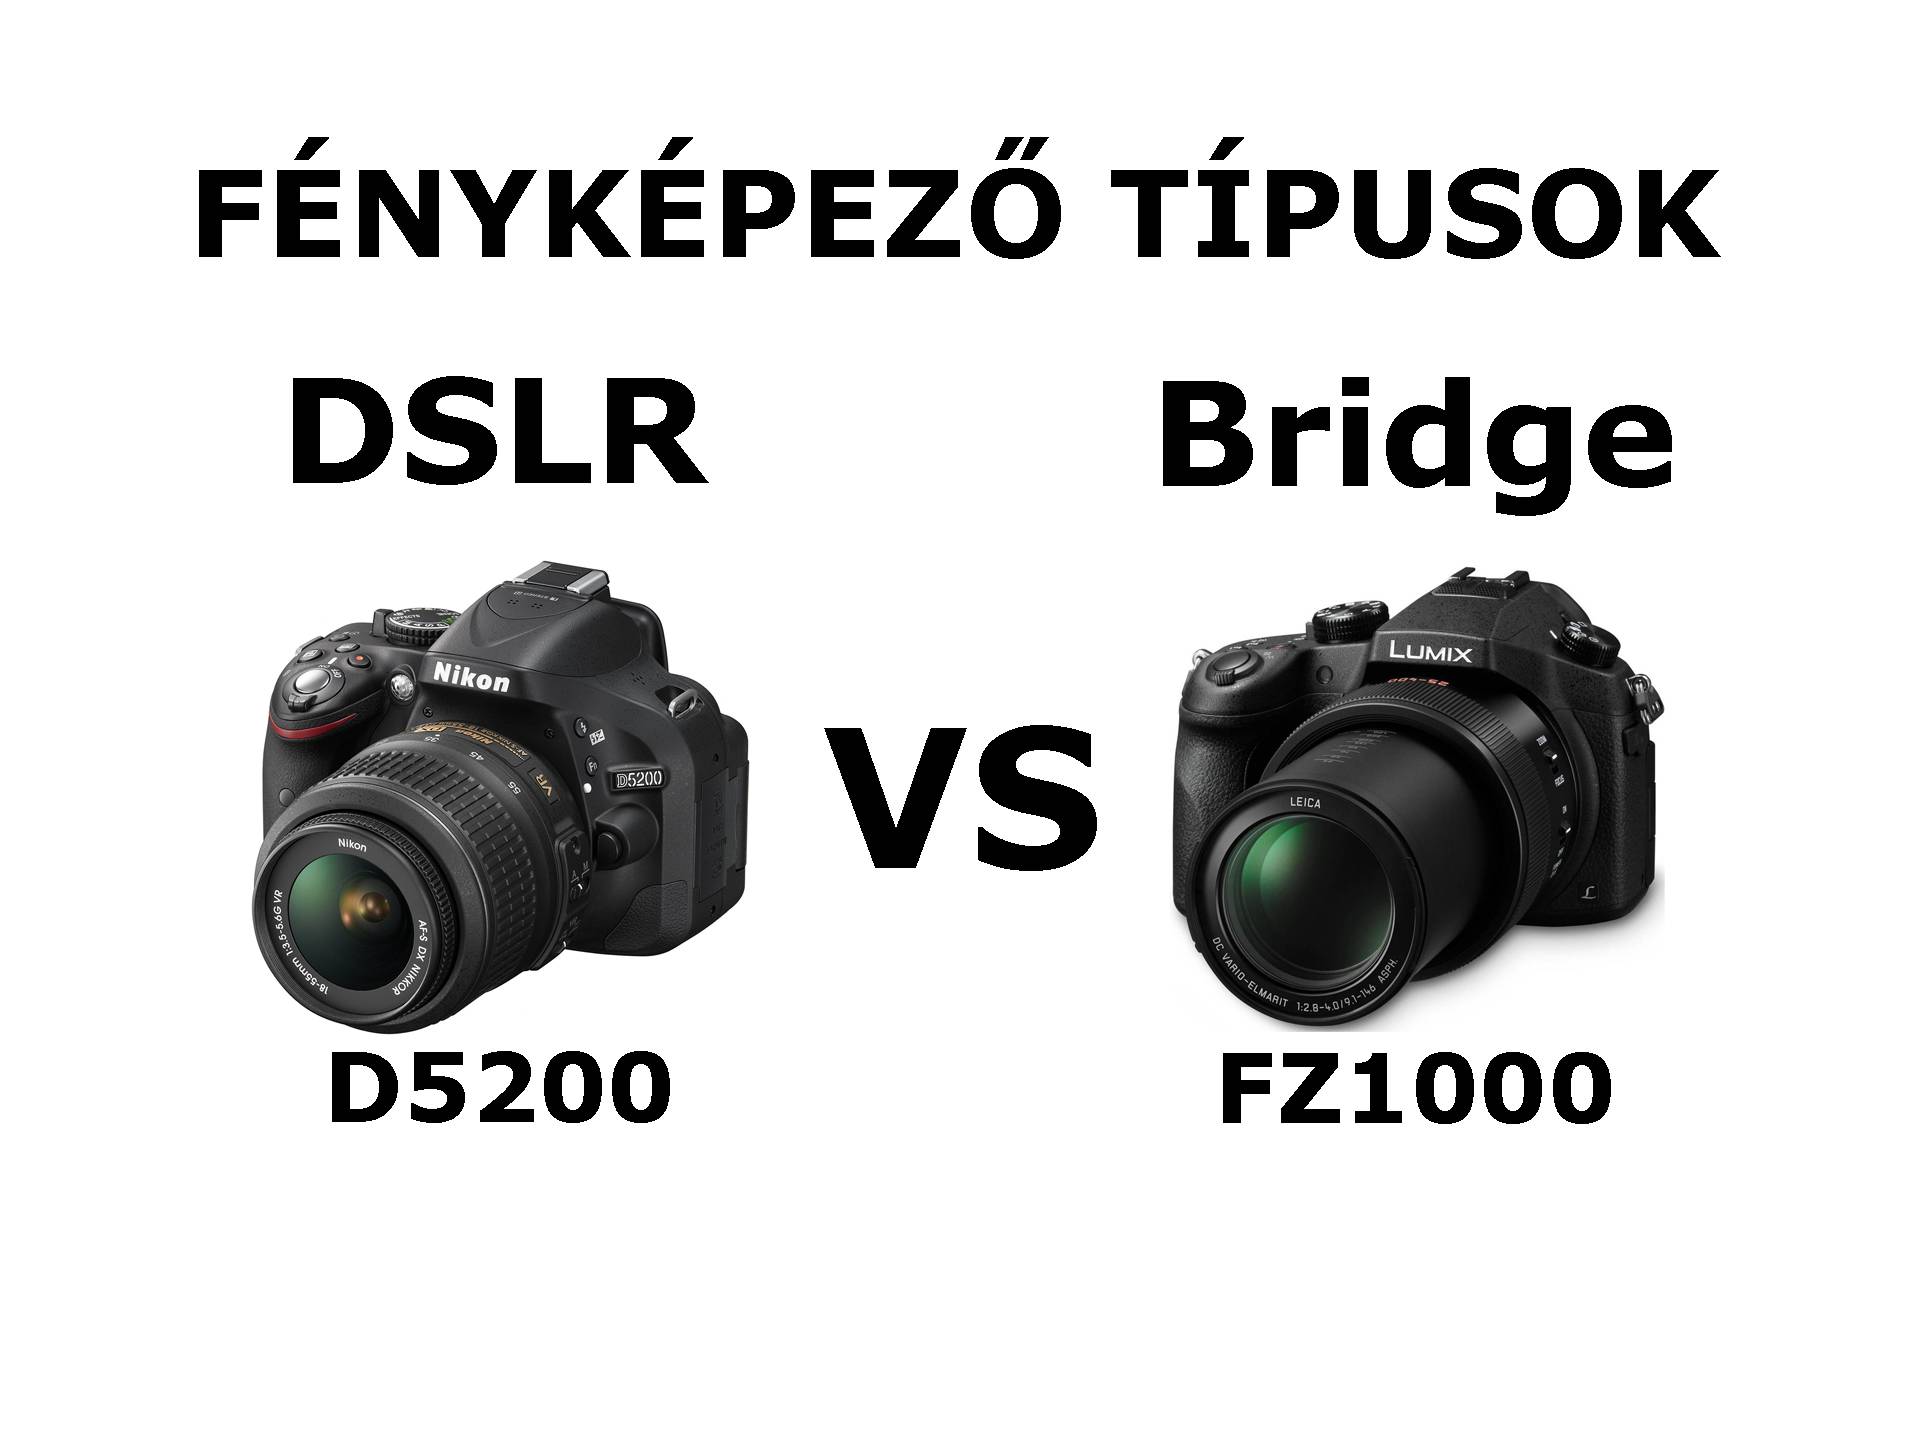 dslr_vs_bridge_borito_03.jpg